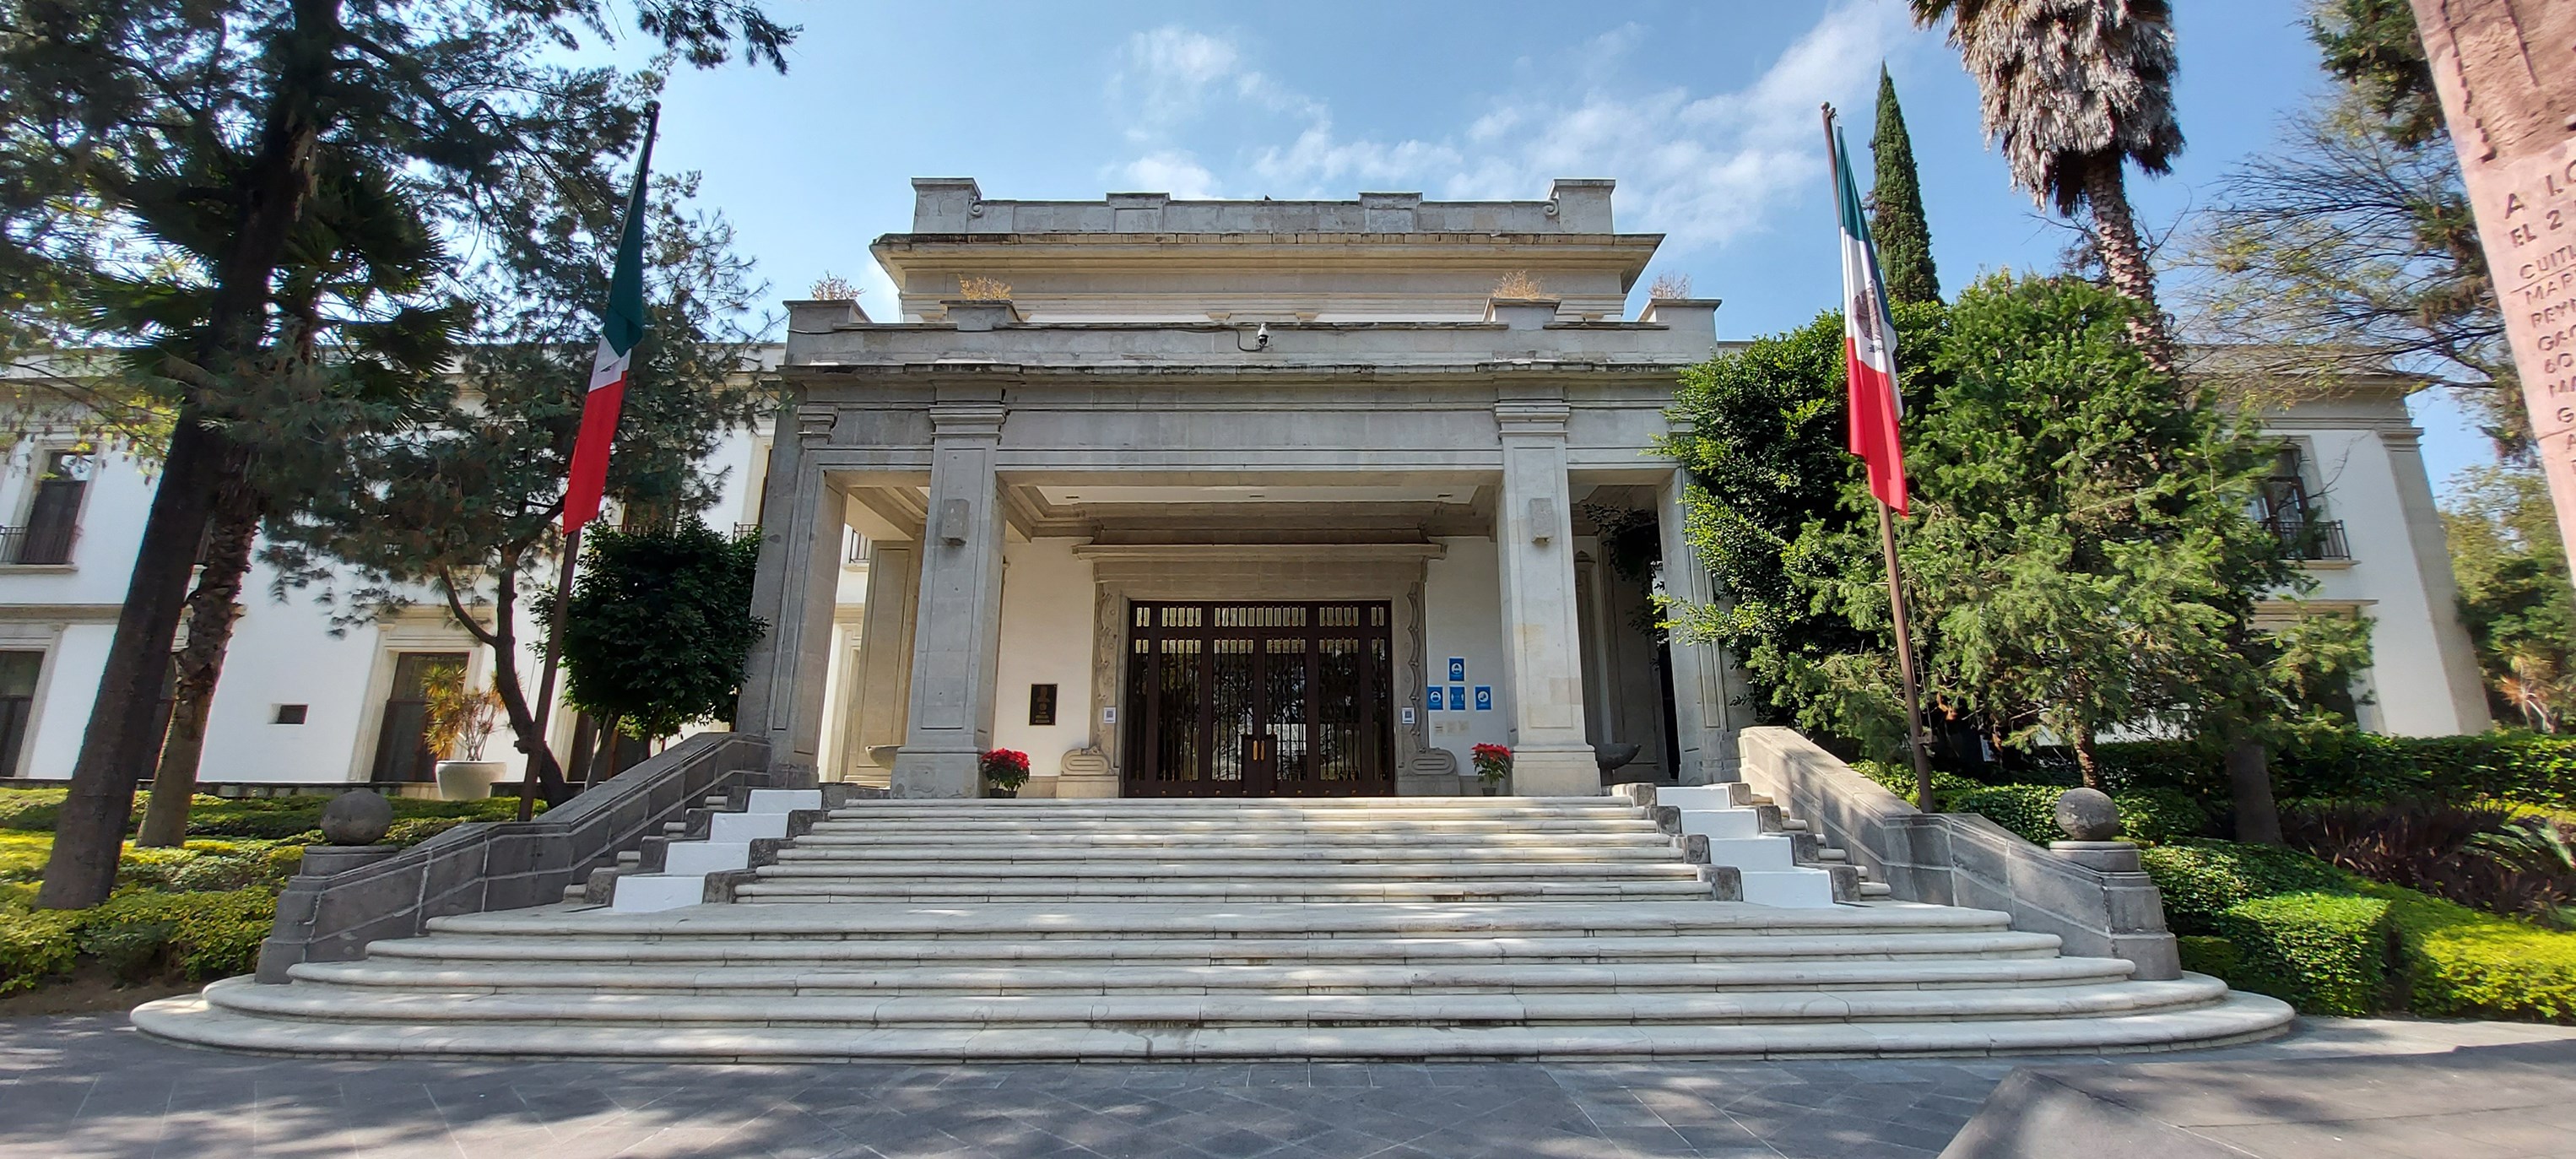 Los Pinos Museum, Mexico City | GlobeQuest Blog